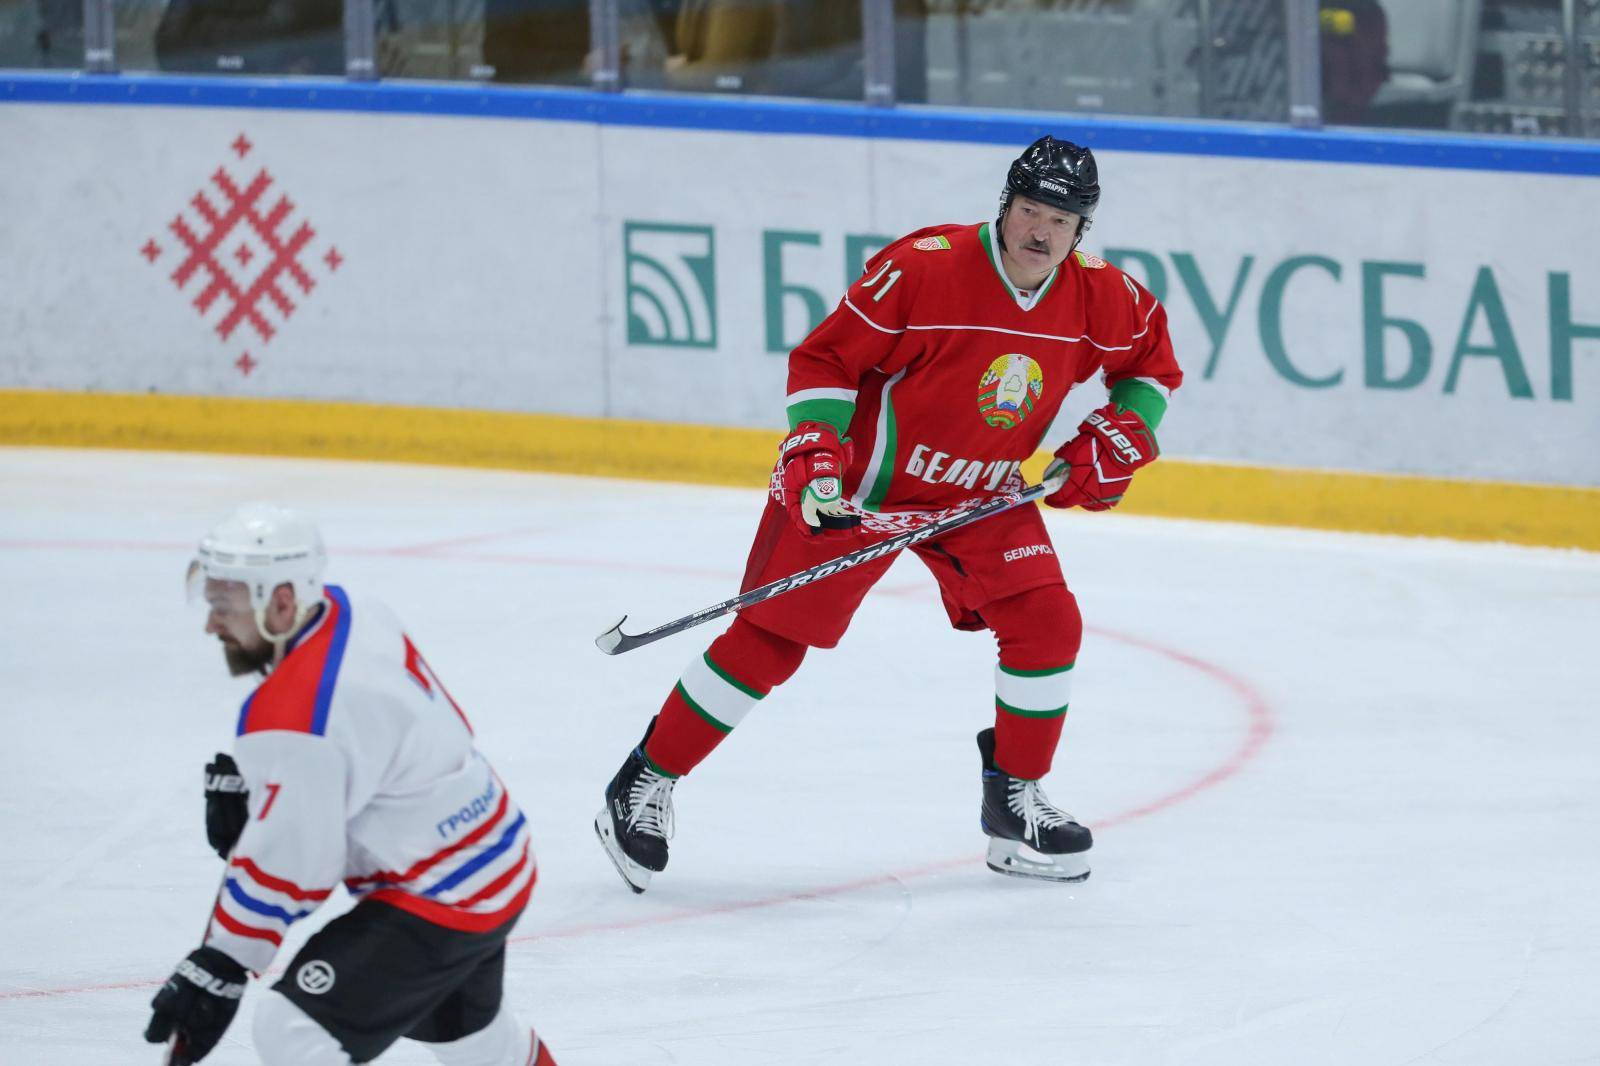 Belarusian President Alexander Lukashenko takes part in an amateur ice hockey game in Minsk